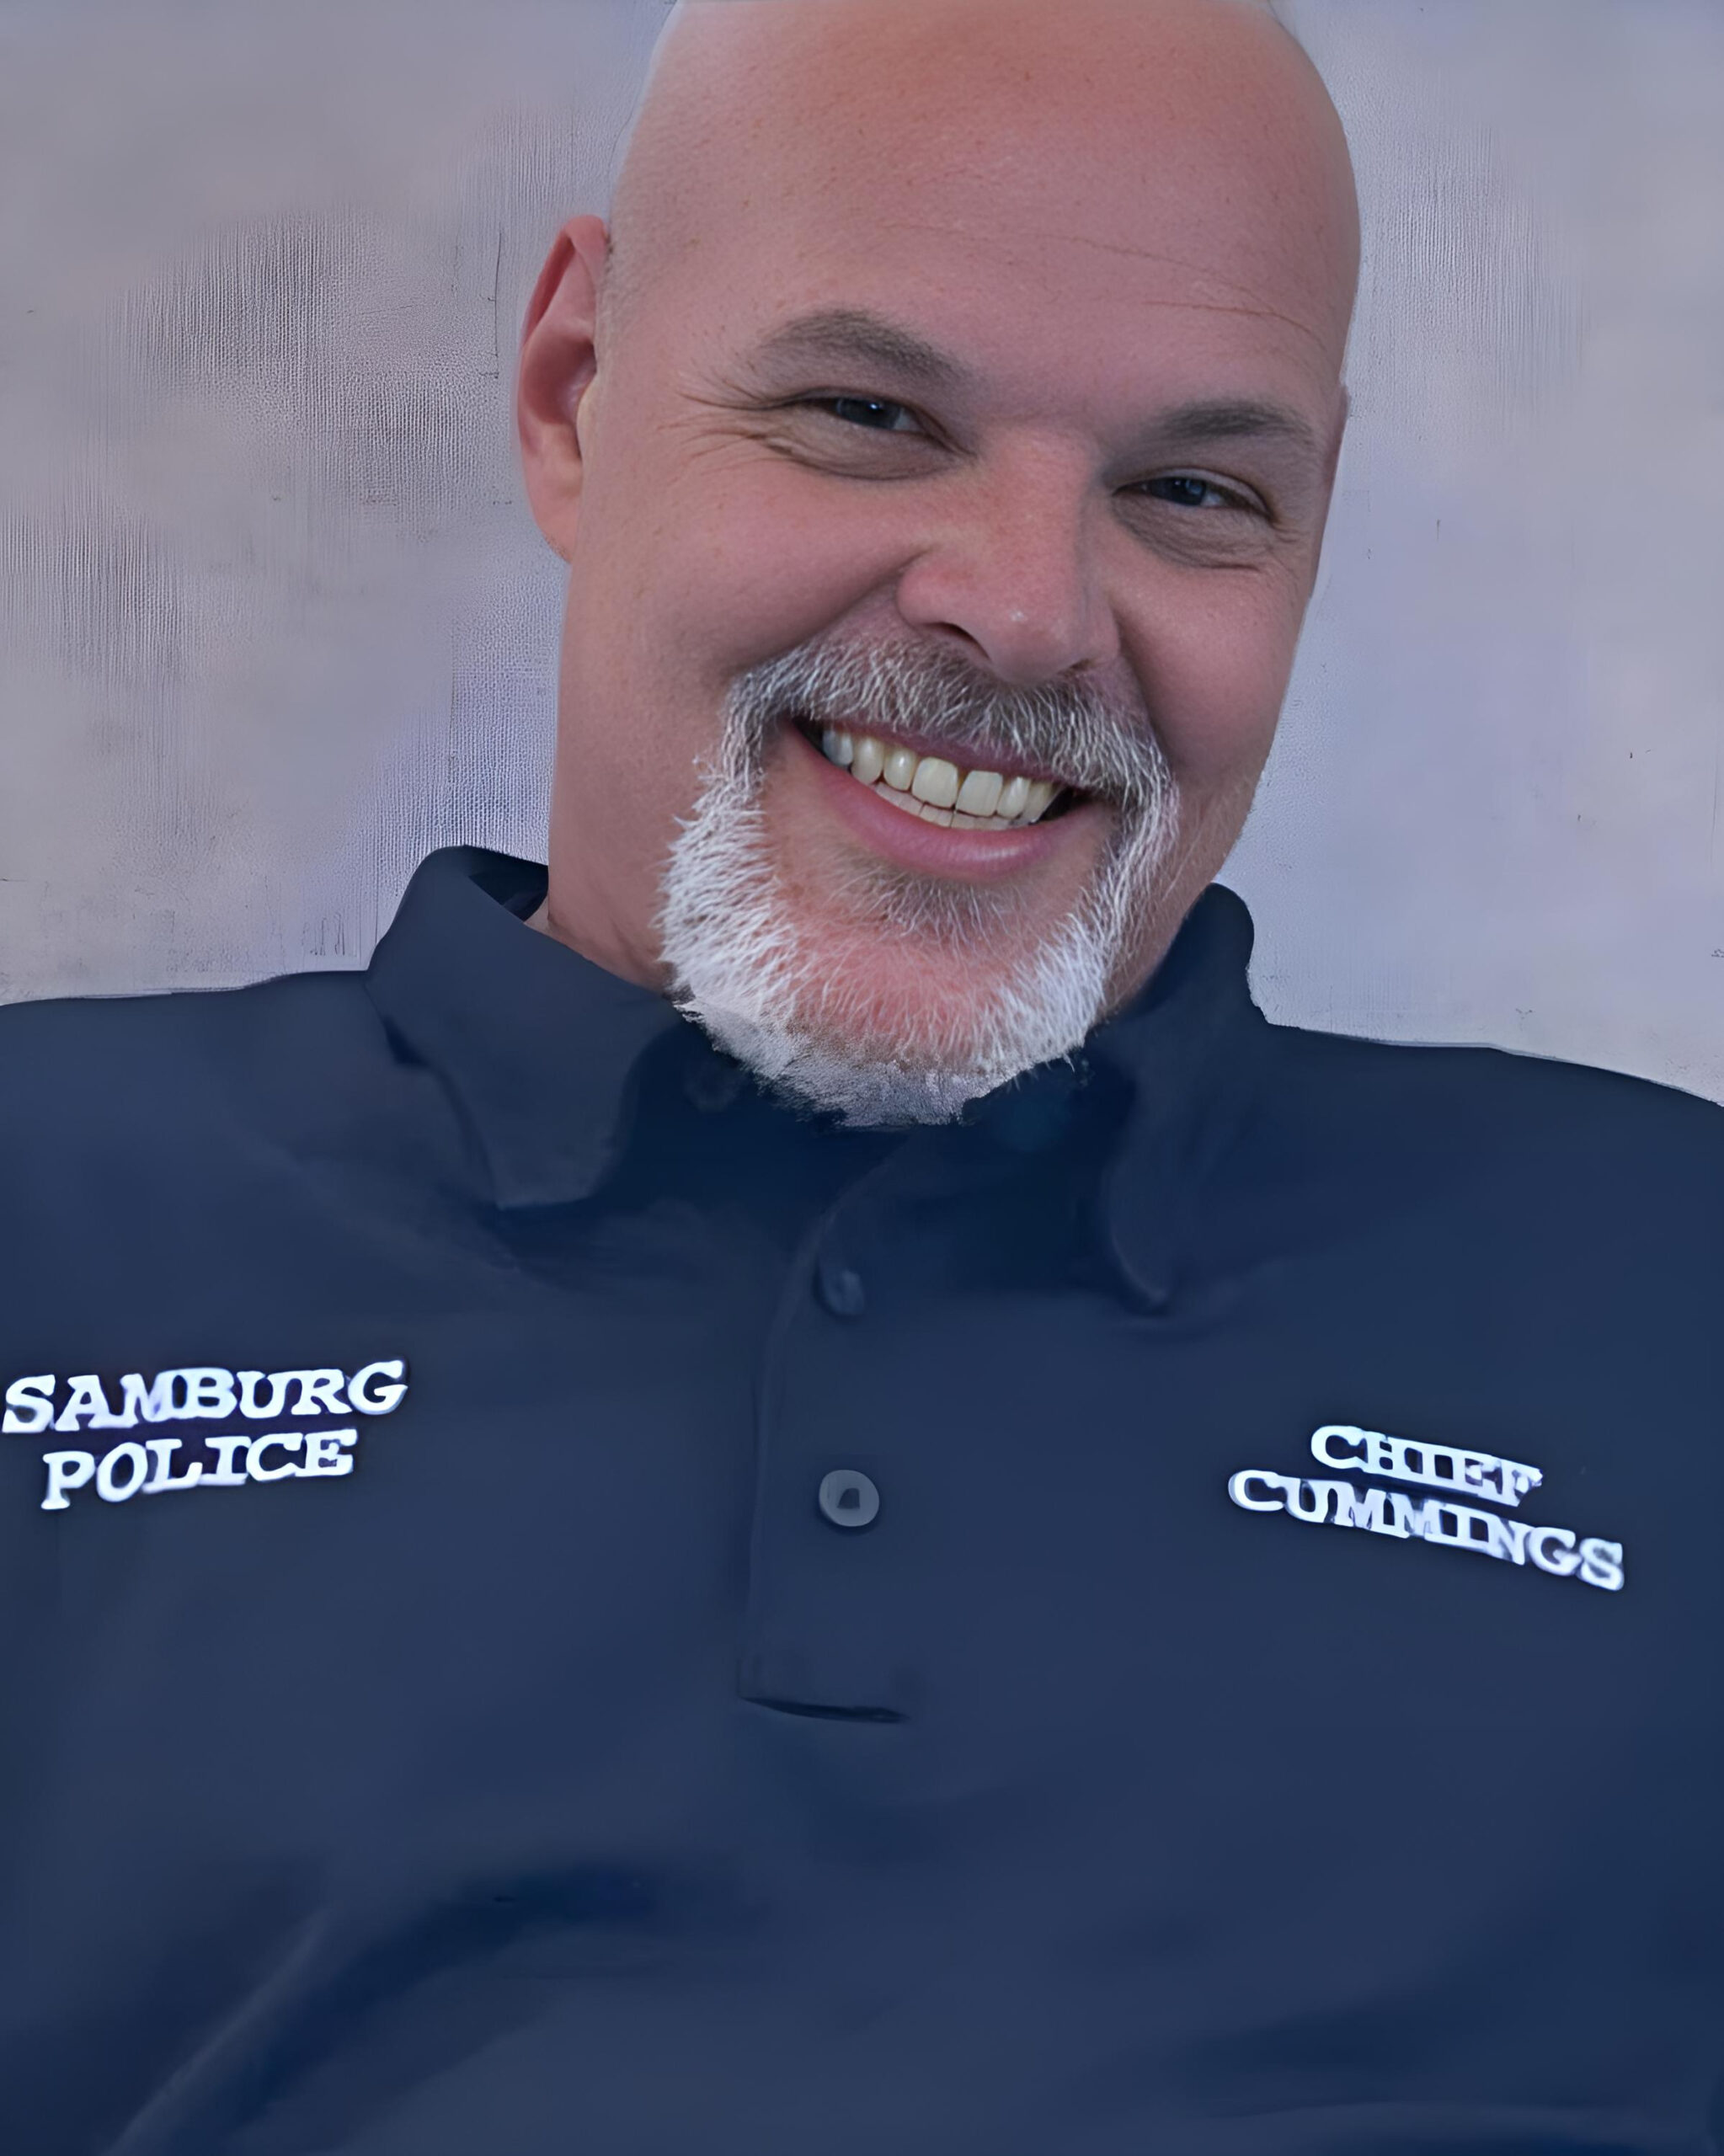 Chief of Police Christopher Byard Cummings